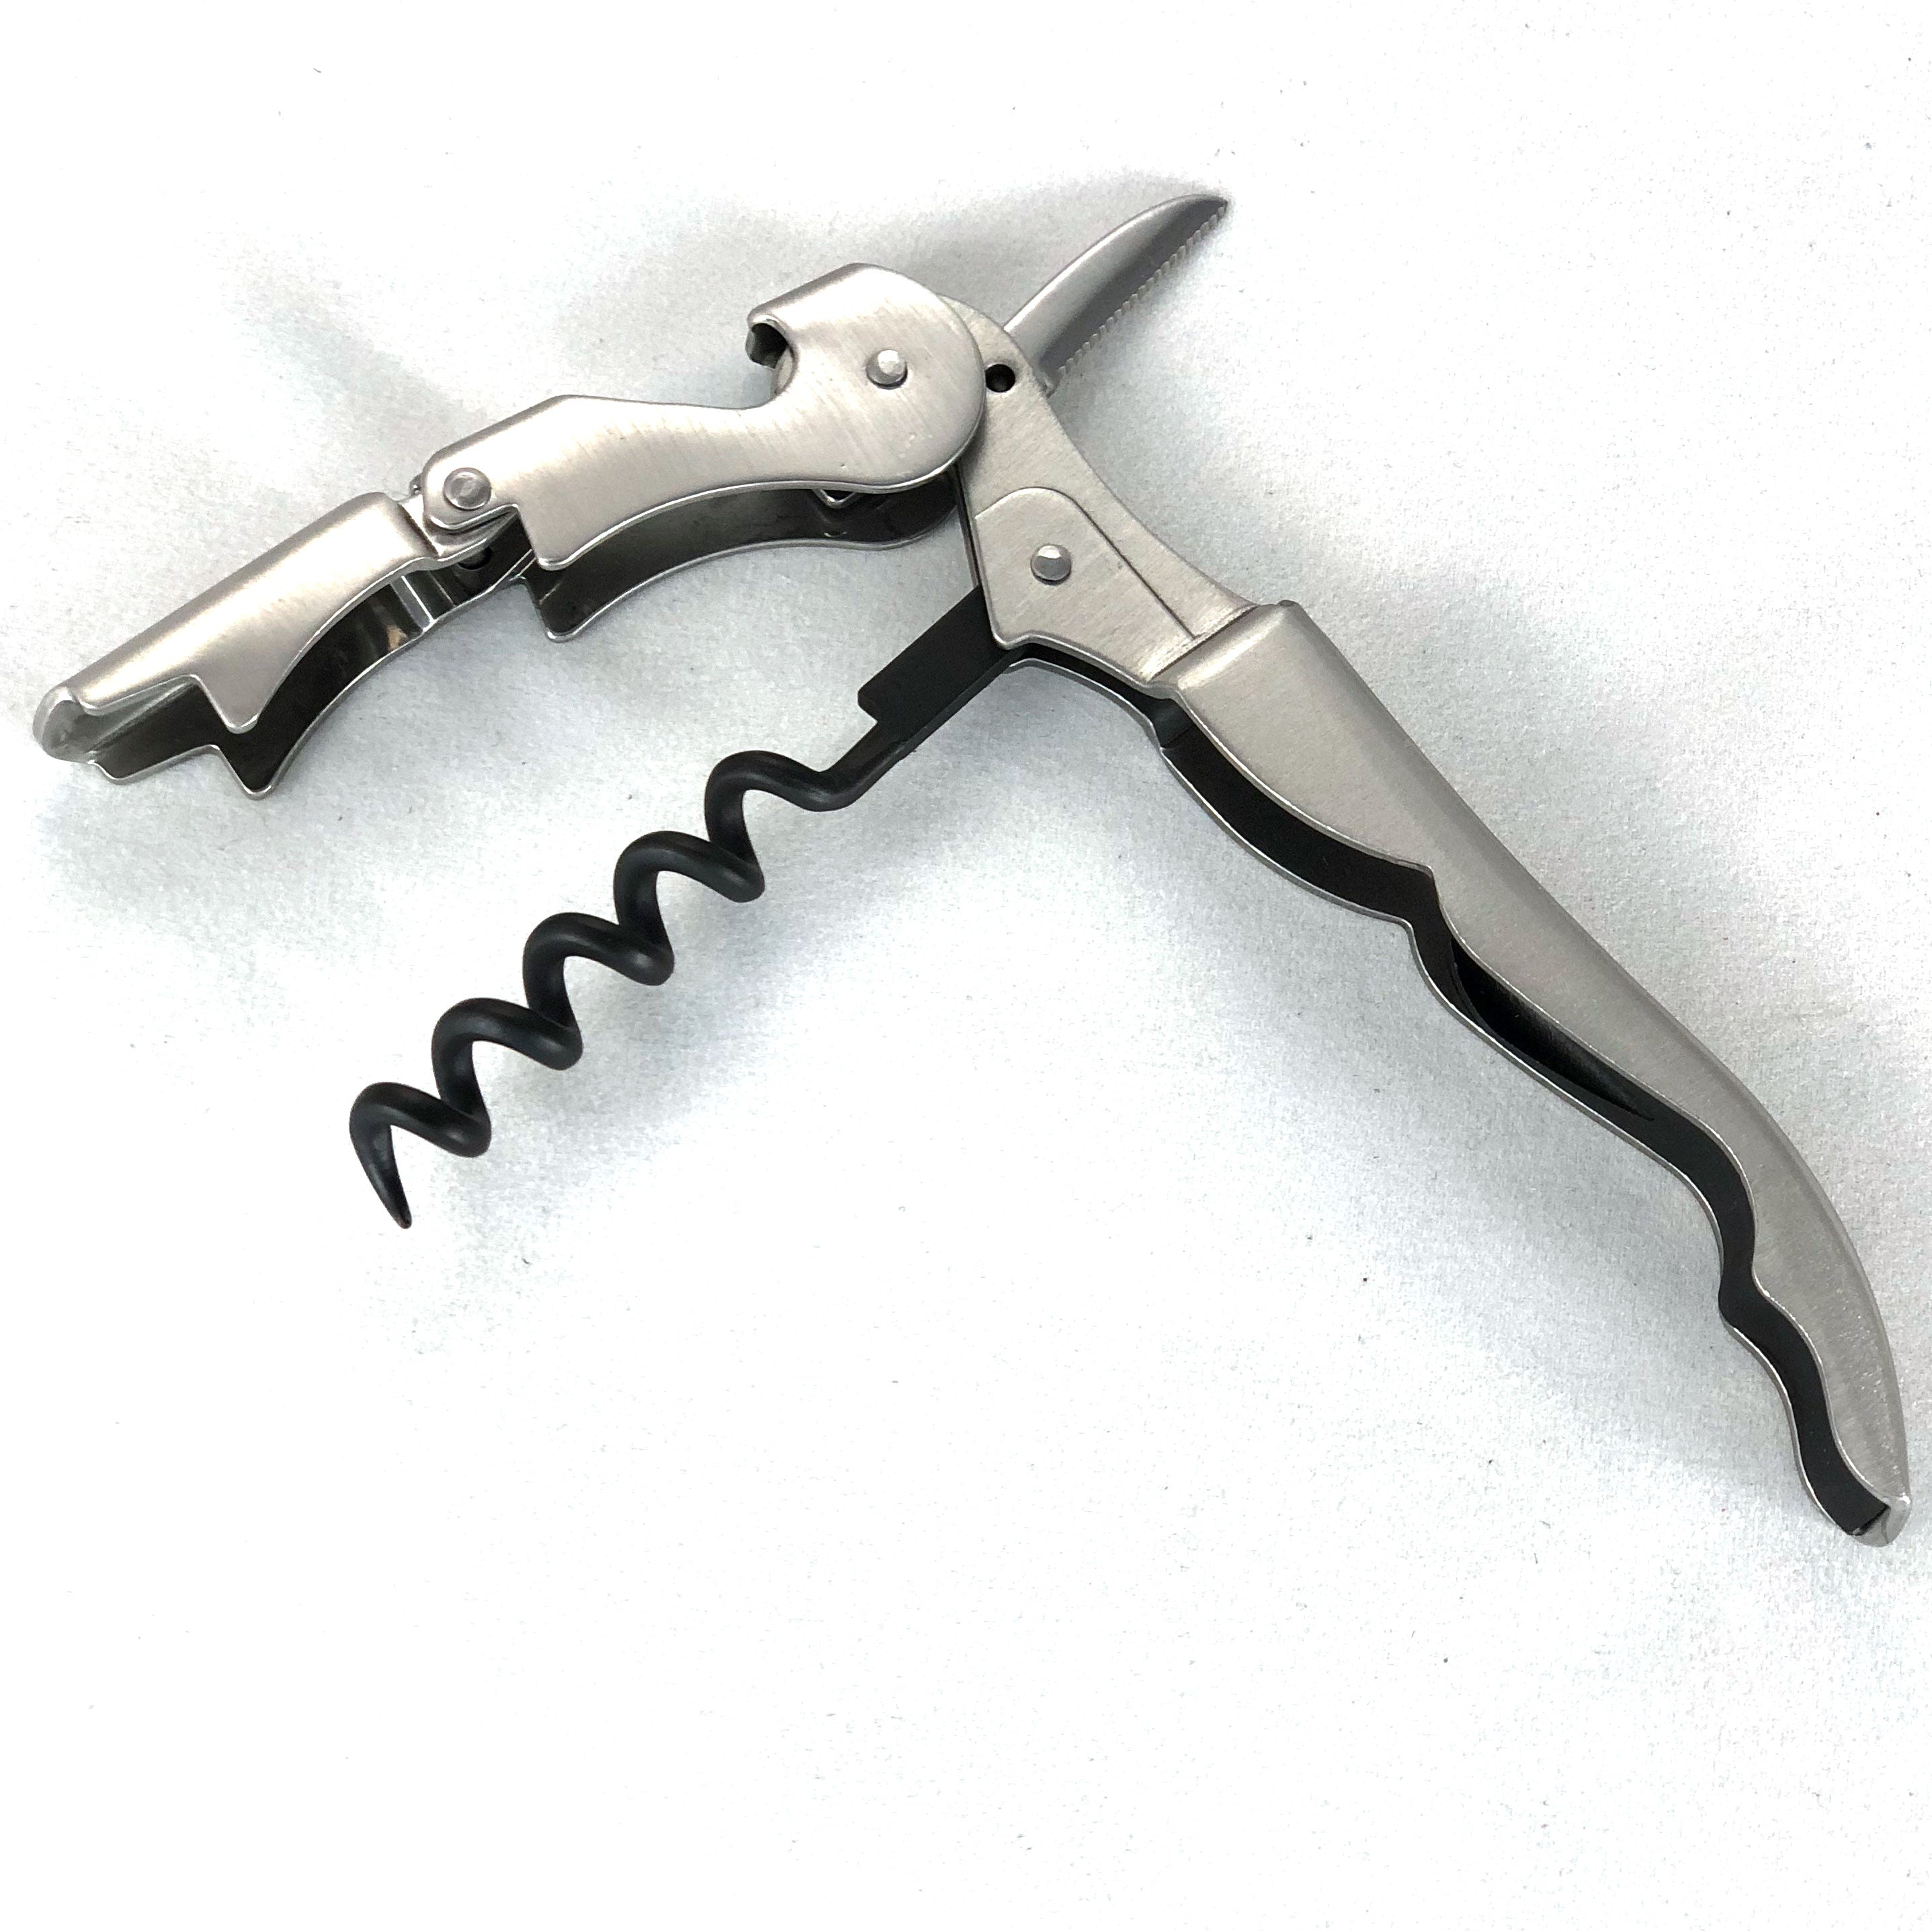 Stainless steel corkscrew shown open.